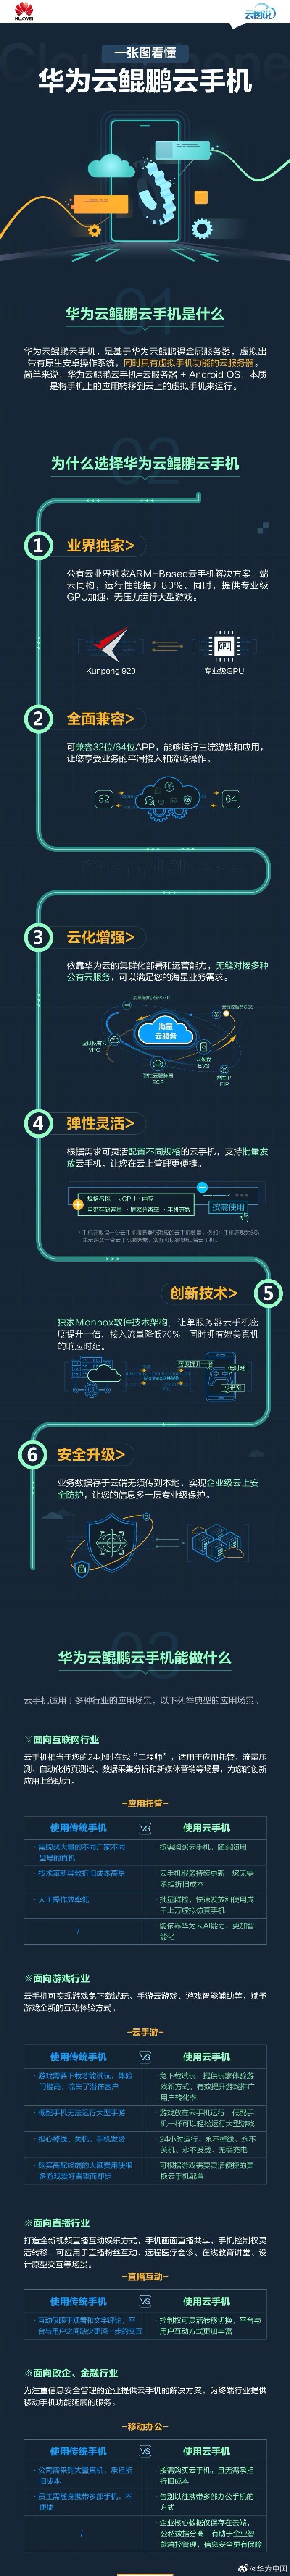 Huawei Cloud Smartphone